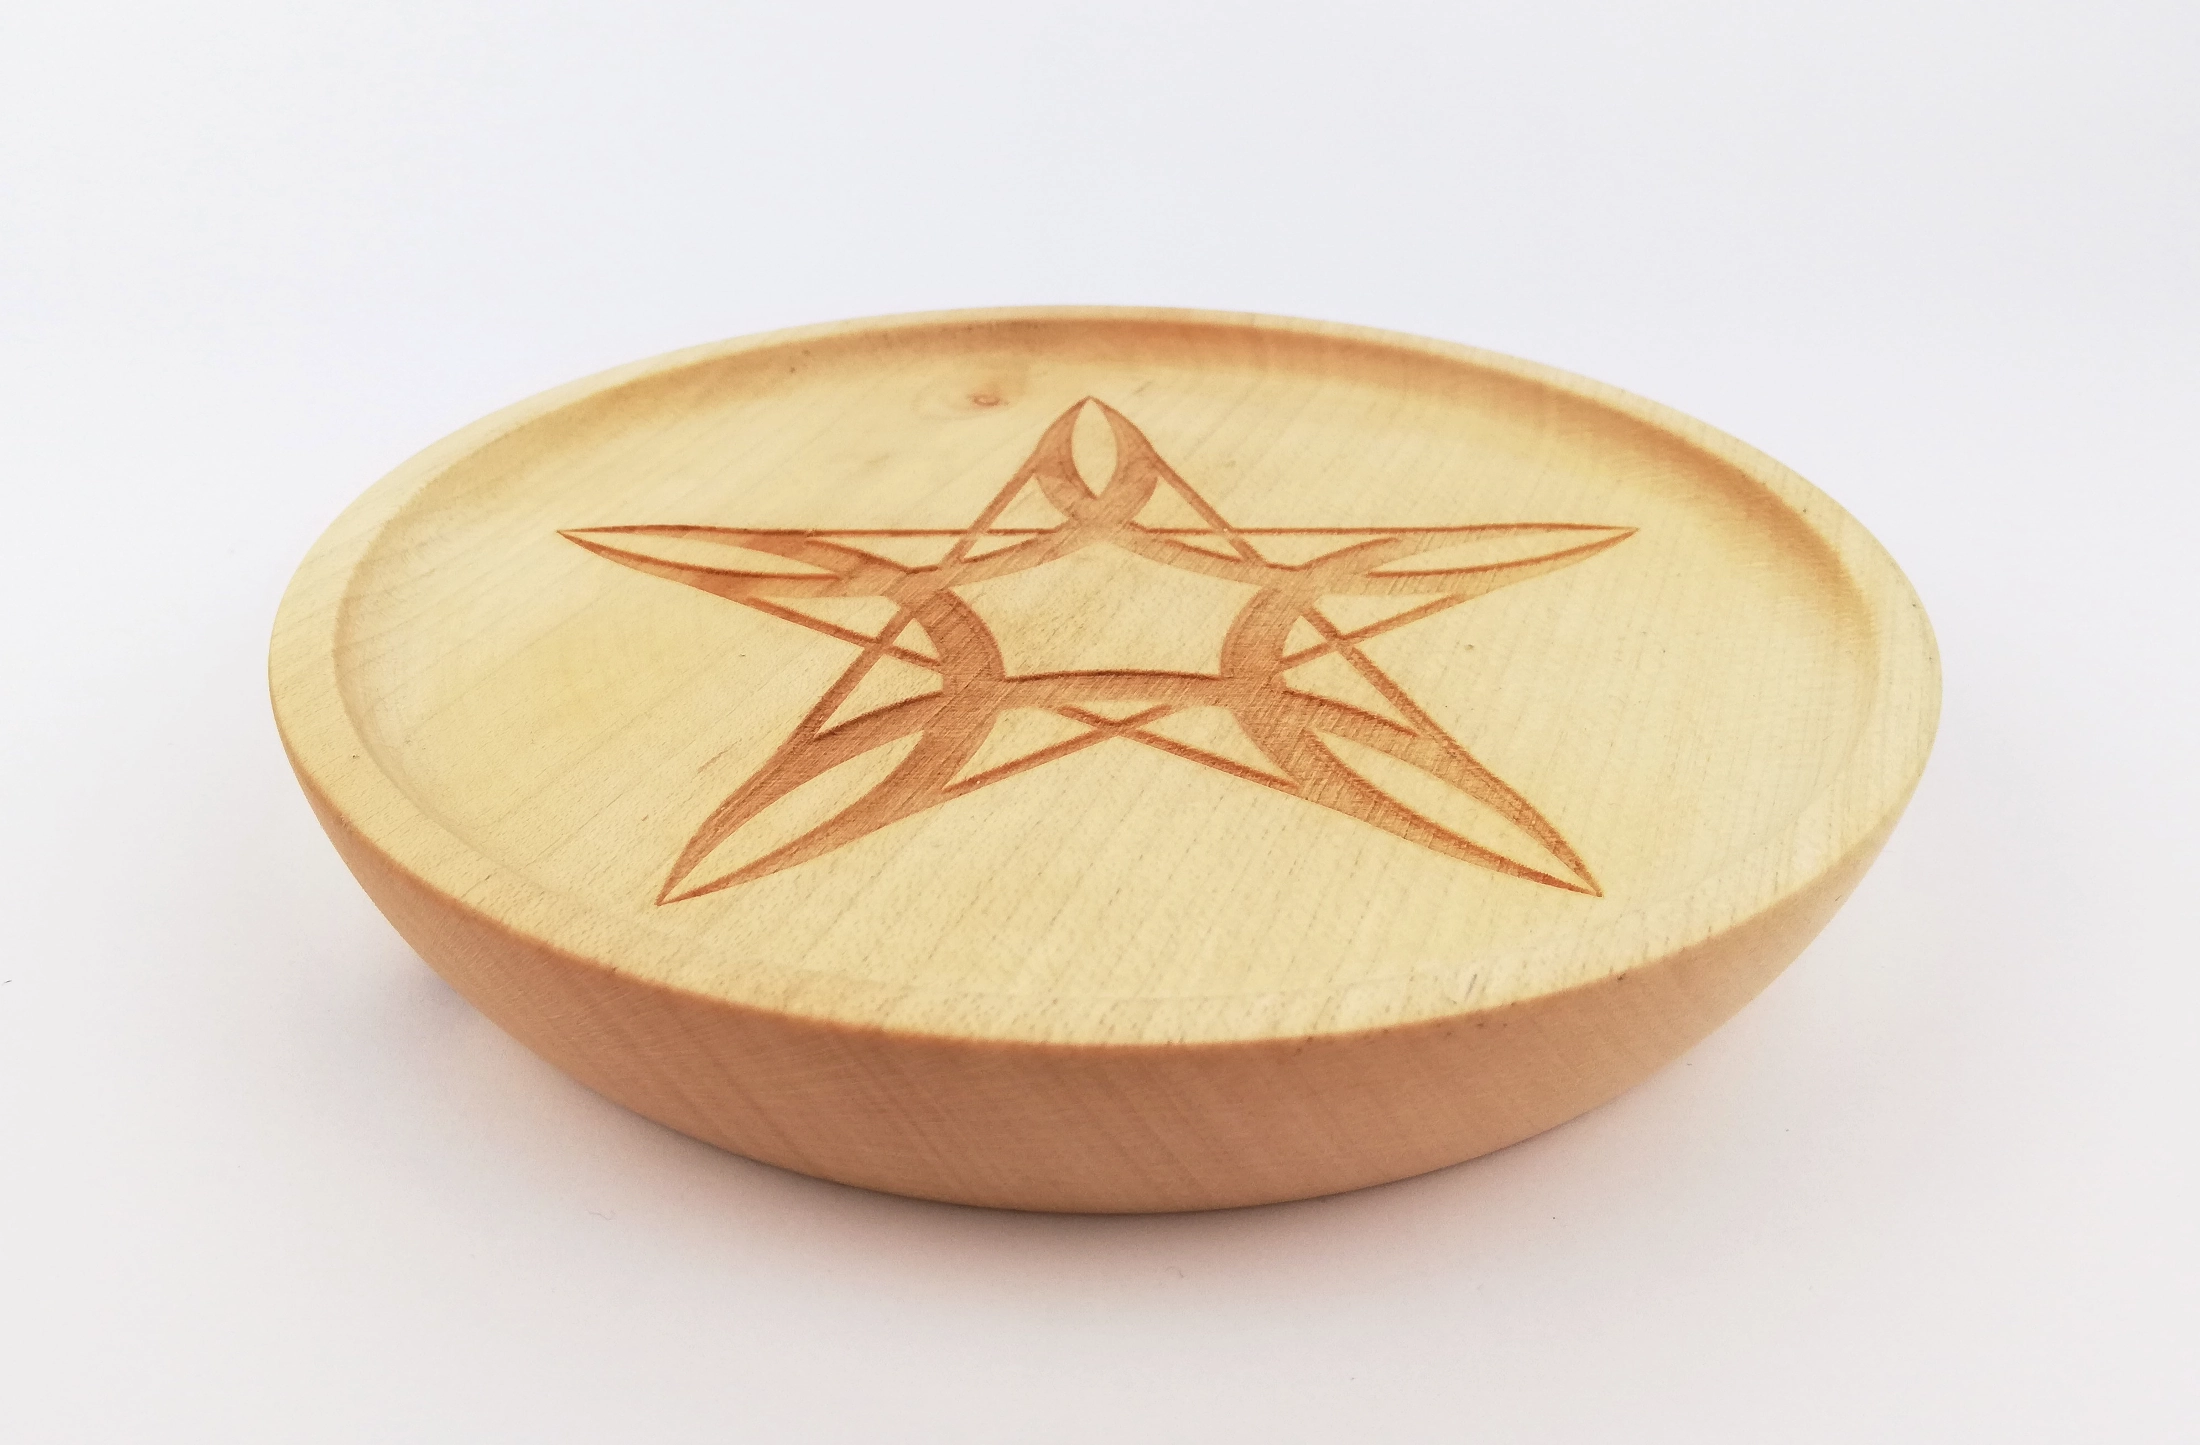 Pentagram on a small plate (16cm/6.3in in diameter), side.